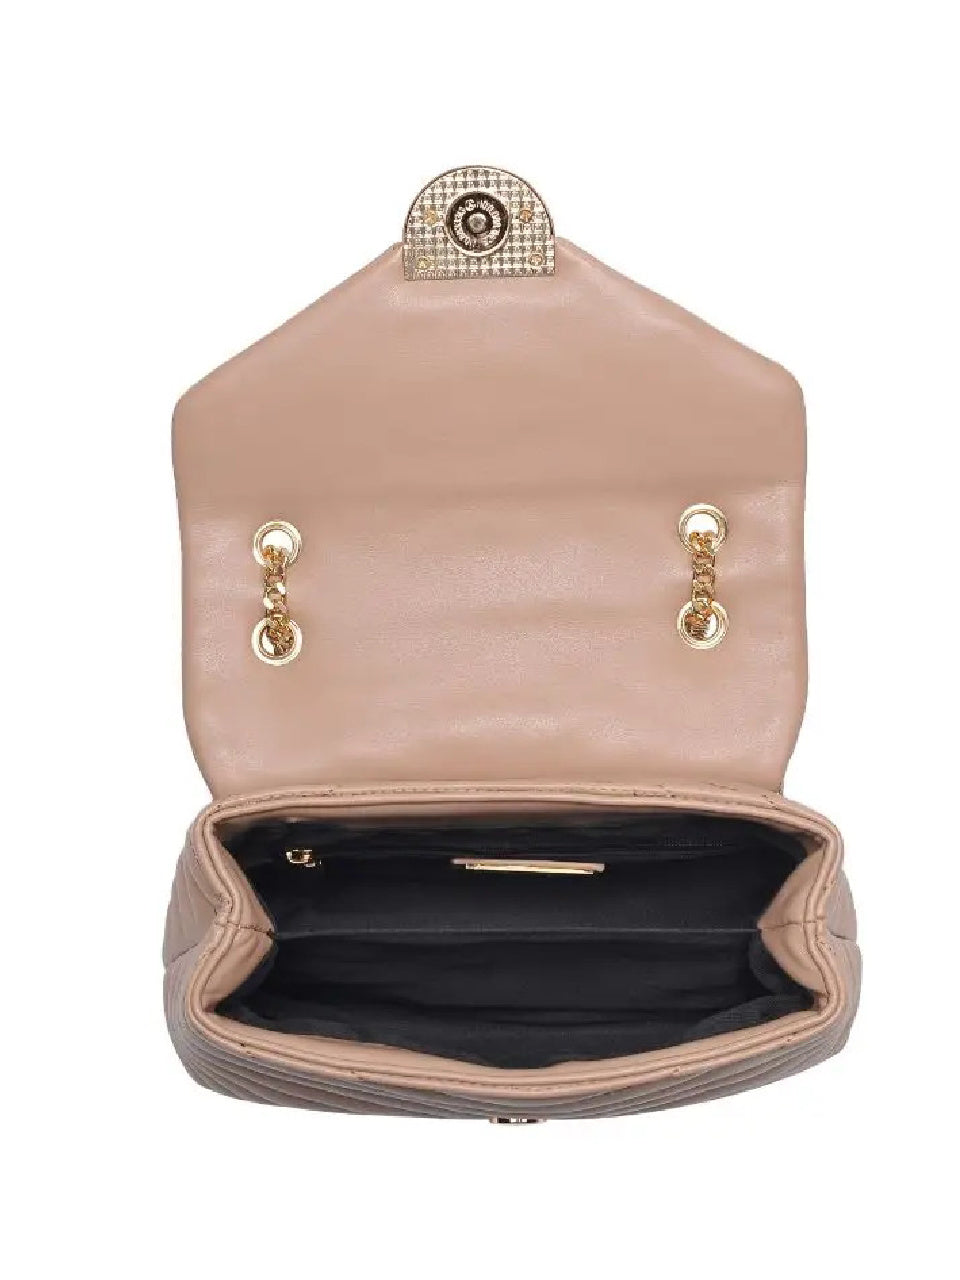 Valentino Faux Leather Handbags